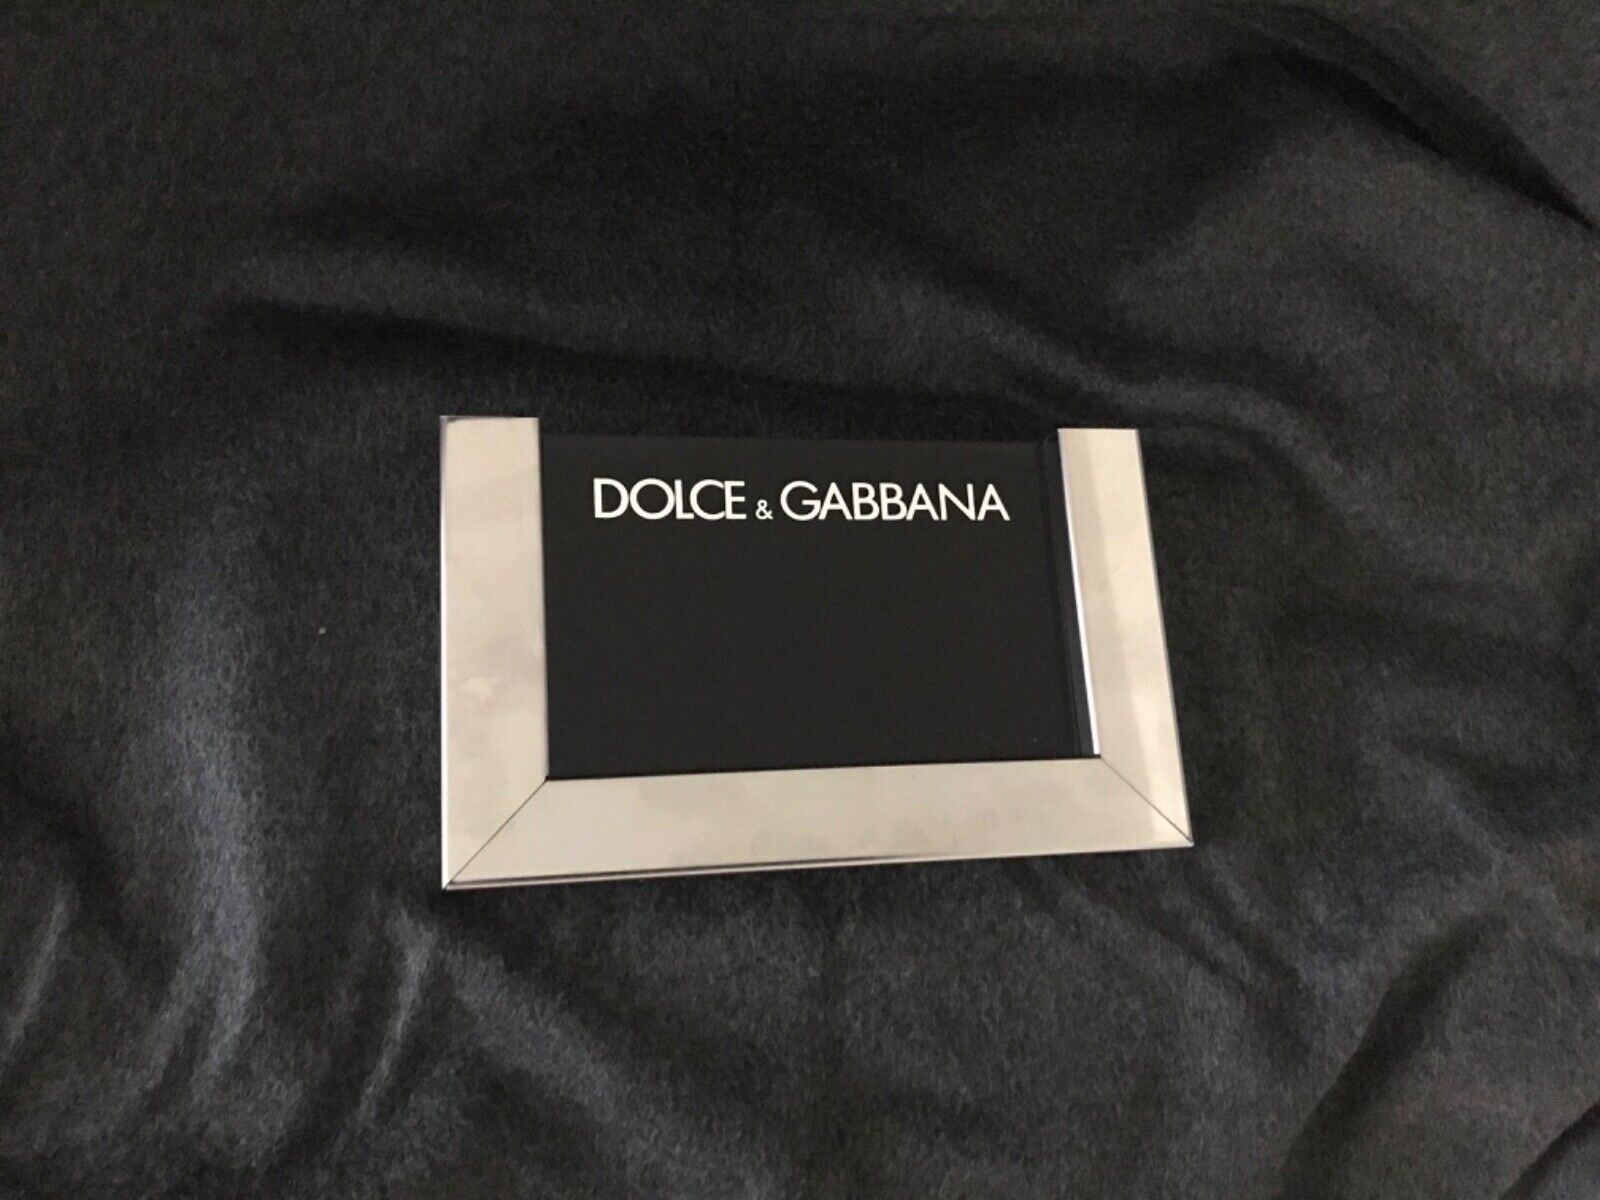 DOLCE & GABANA advertising logo DISPLAY plaque in PLEXIGLASS.